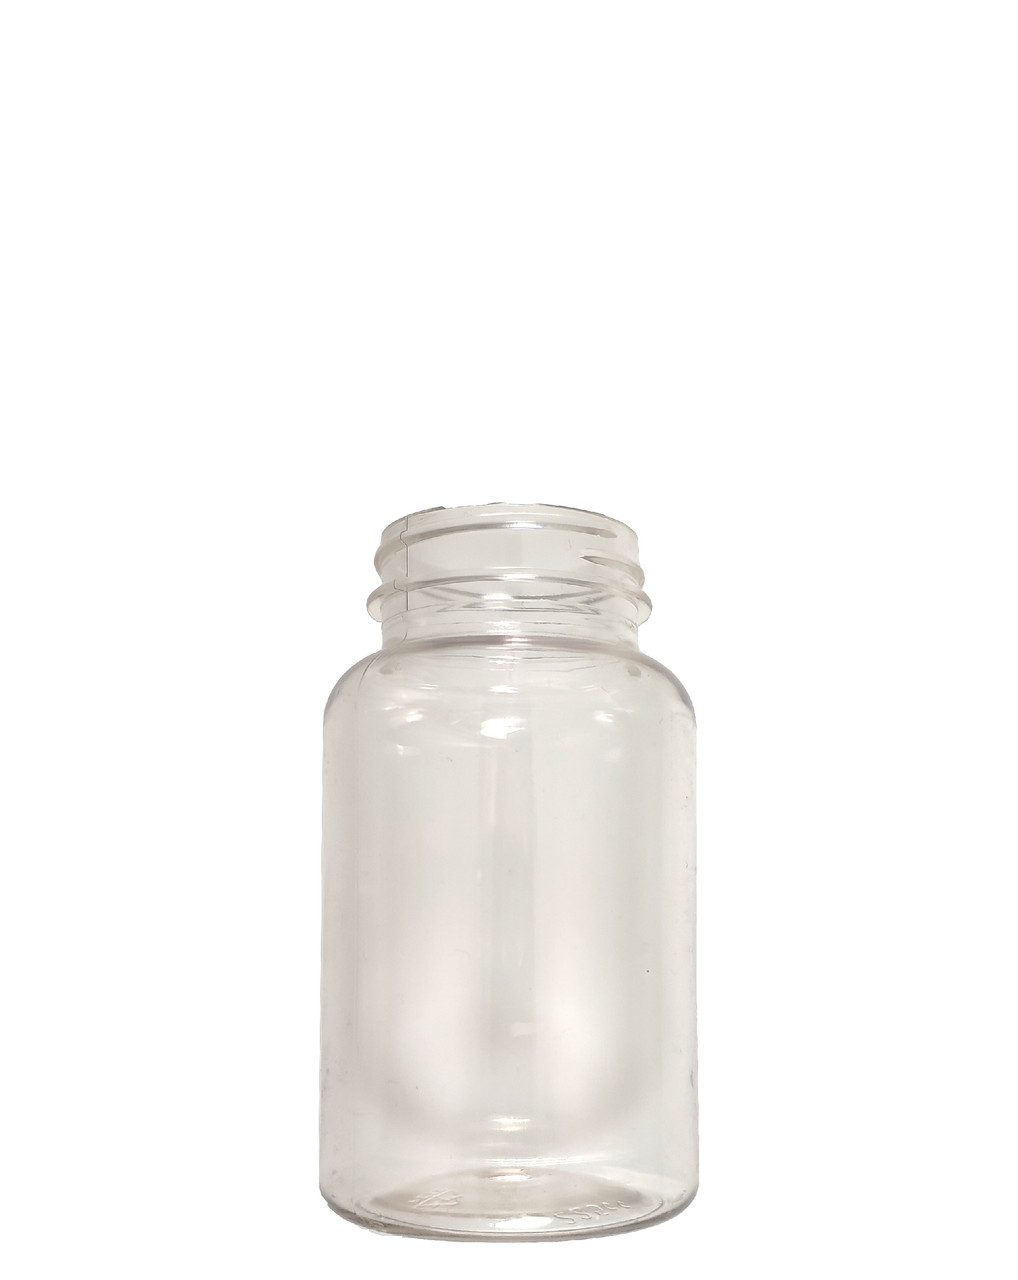 Looking to buy 7g Plastic Jars & Caps for your Application? - Buy Plastic  Jars, Bottles & Closures Wholesale - Manufacturer Direct - Parkway Plastics  Inc.